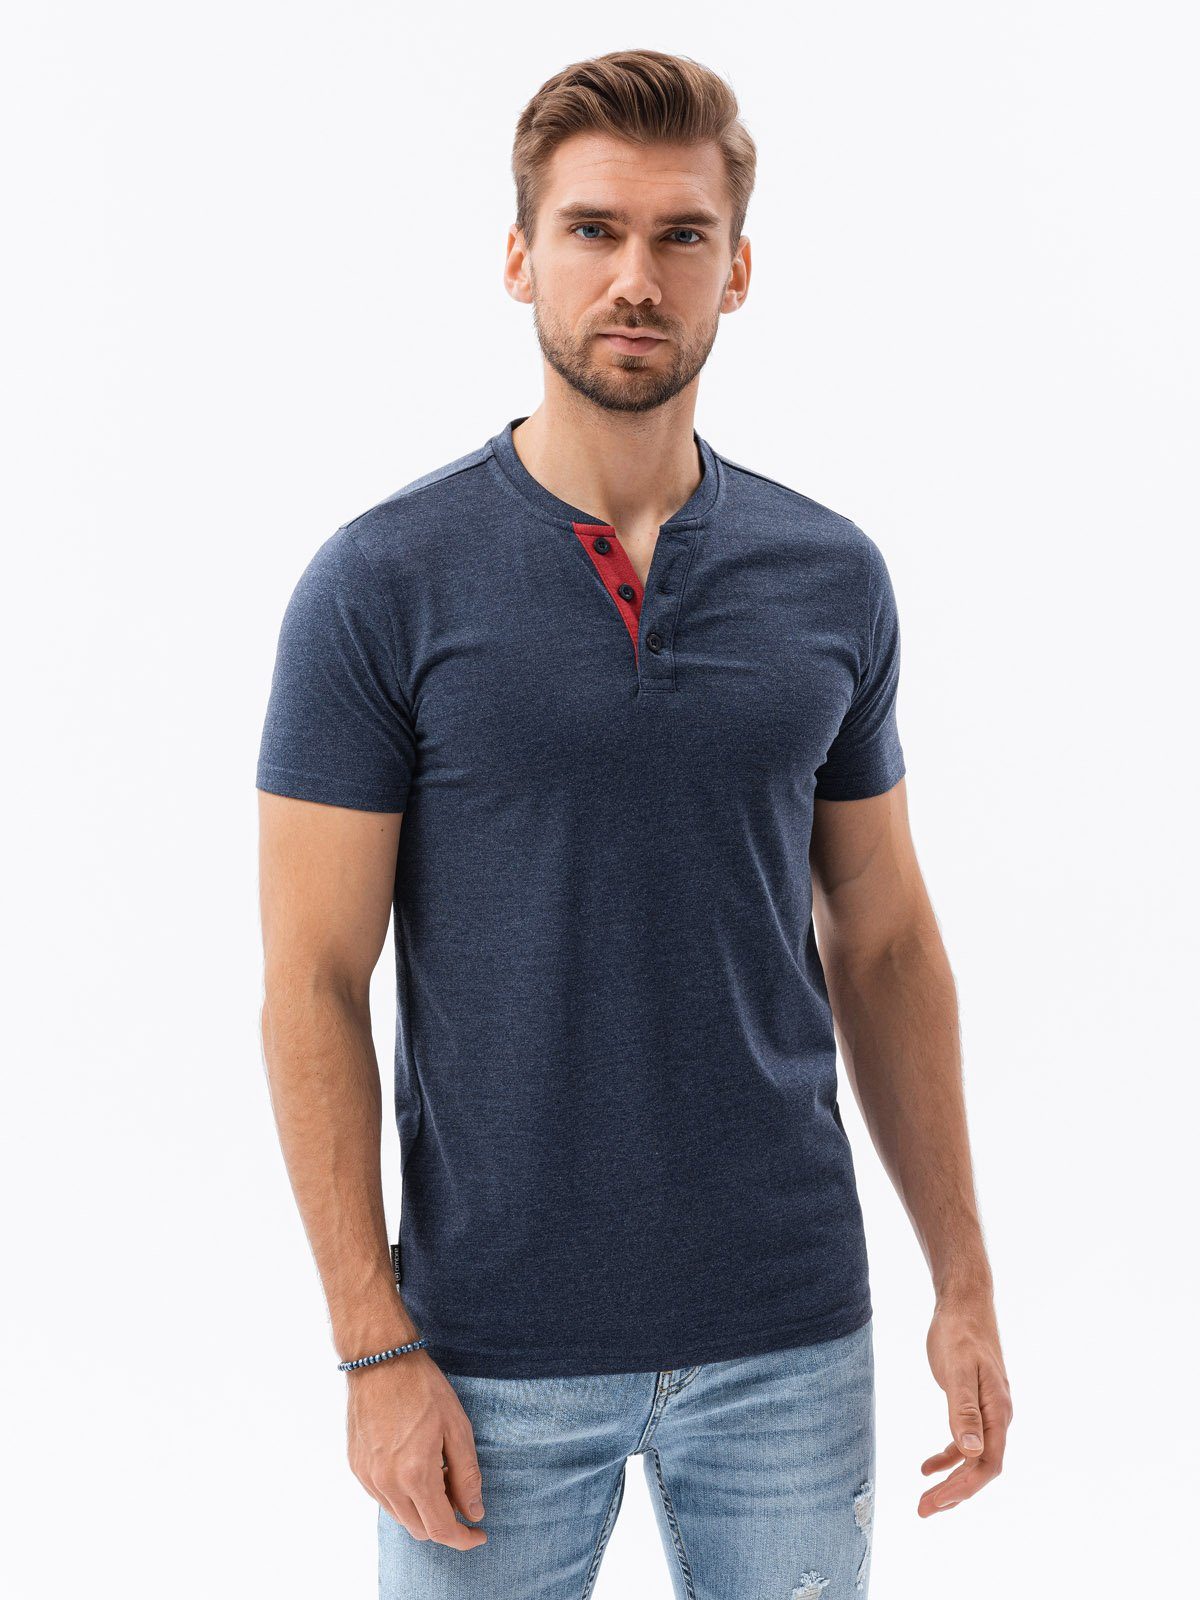 S1390 OMBRE T-Shirt Unifarbenes Herren-T-Shirt marineblau - L